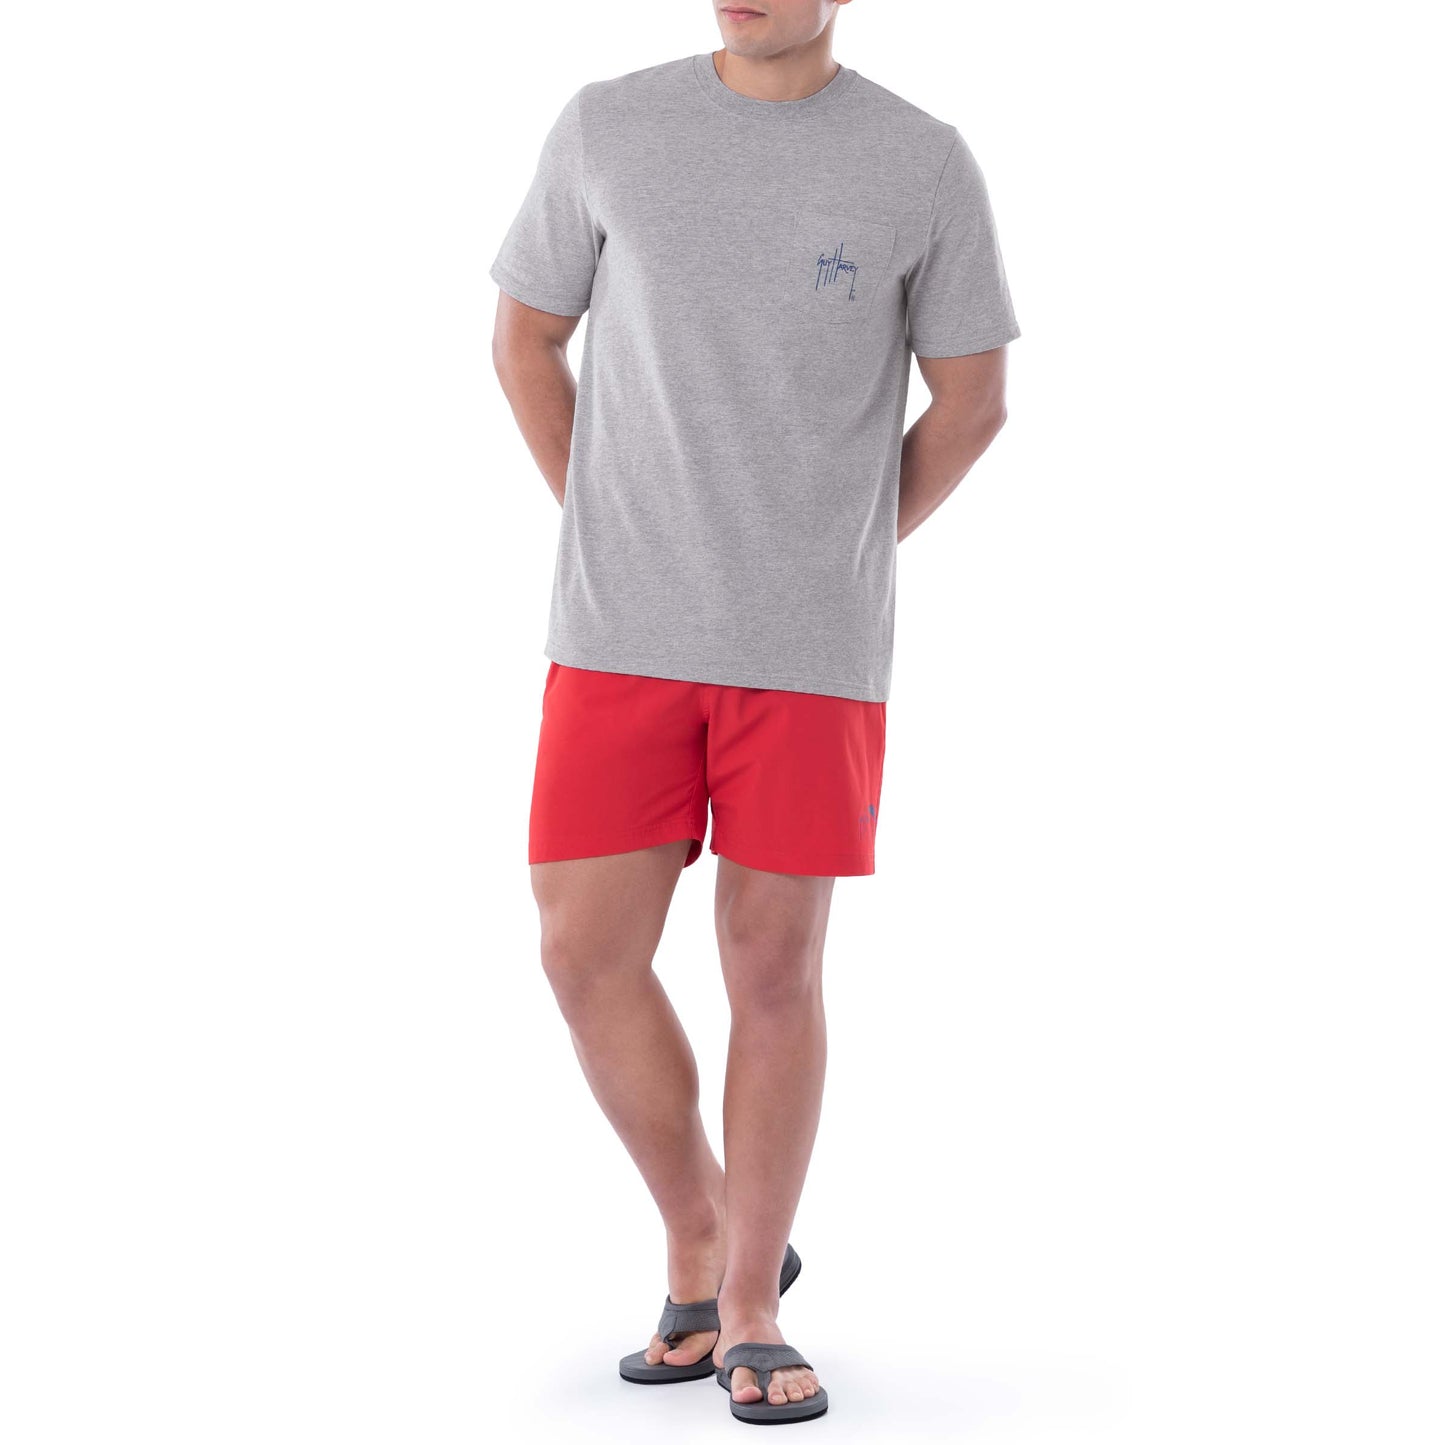 Men's The Flats Short Sleeve Pocket T-Shirt